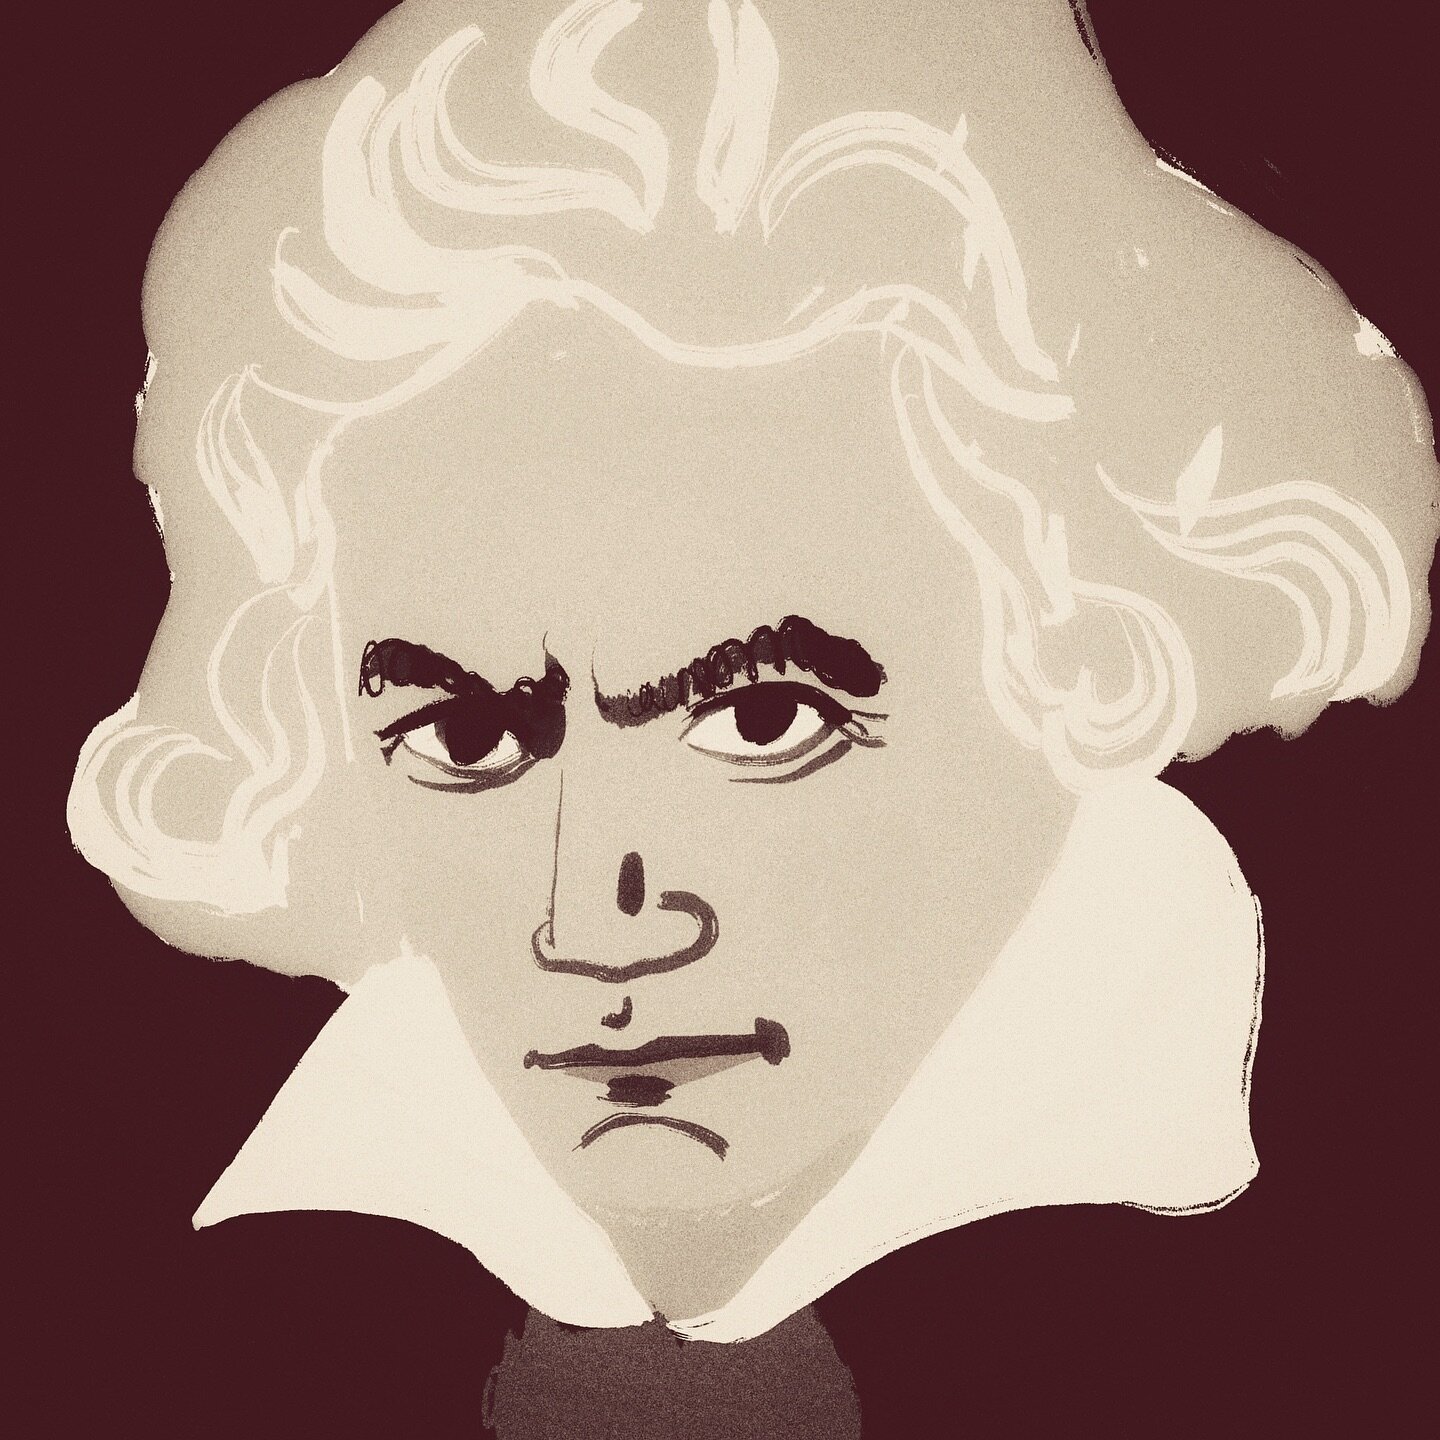 Ludwig van Beethoven, born on this day in 1770.

#beethoven #portrait #illustration #davidpohl #illustrator #pittsburgh #germany